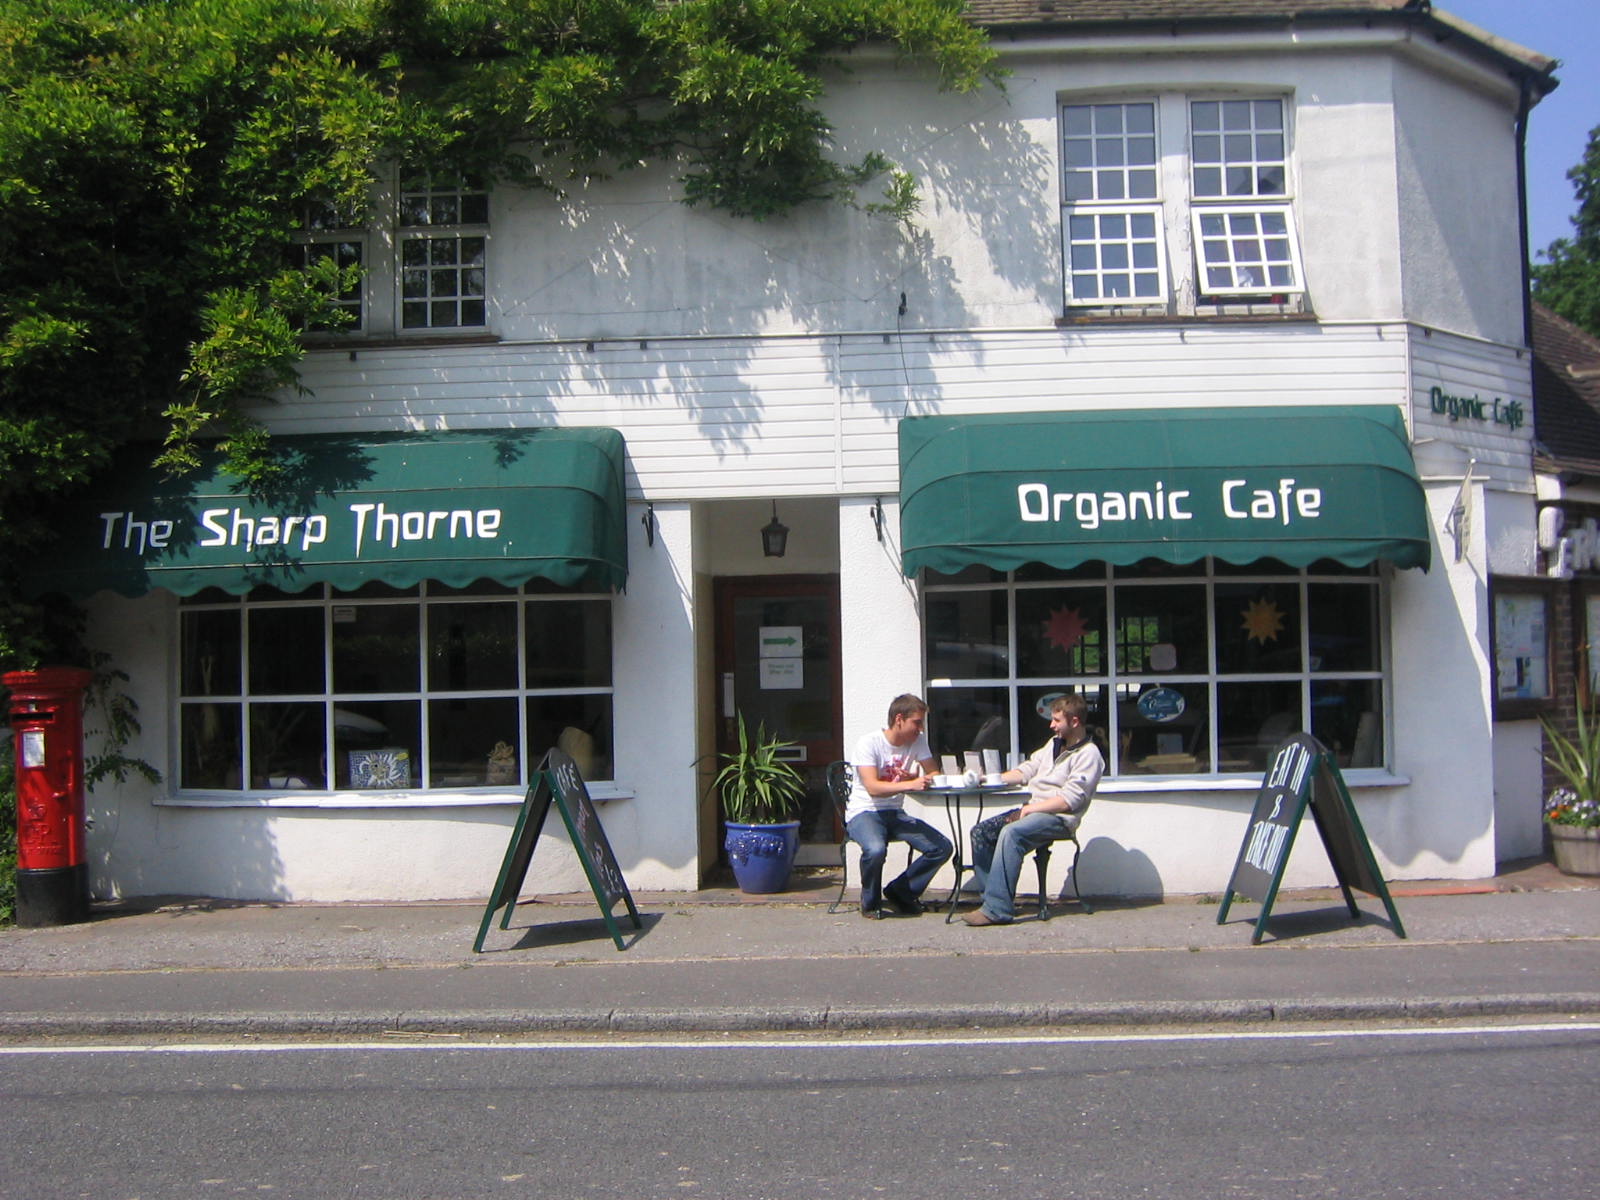 the organic cafe